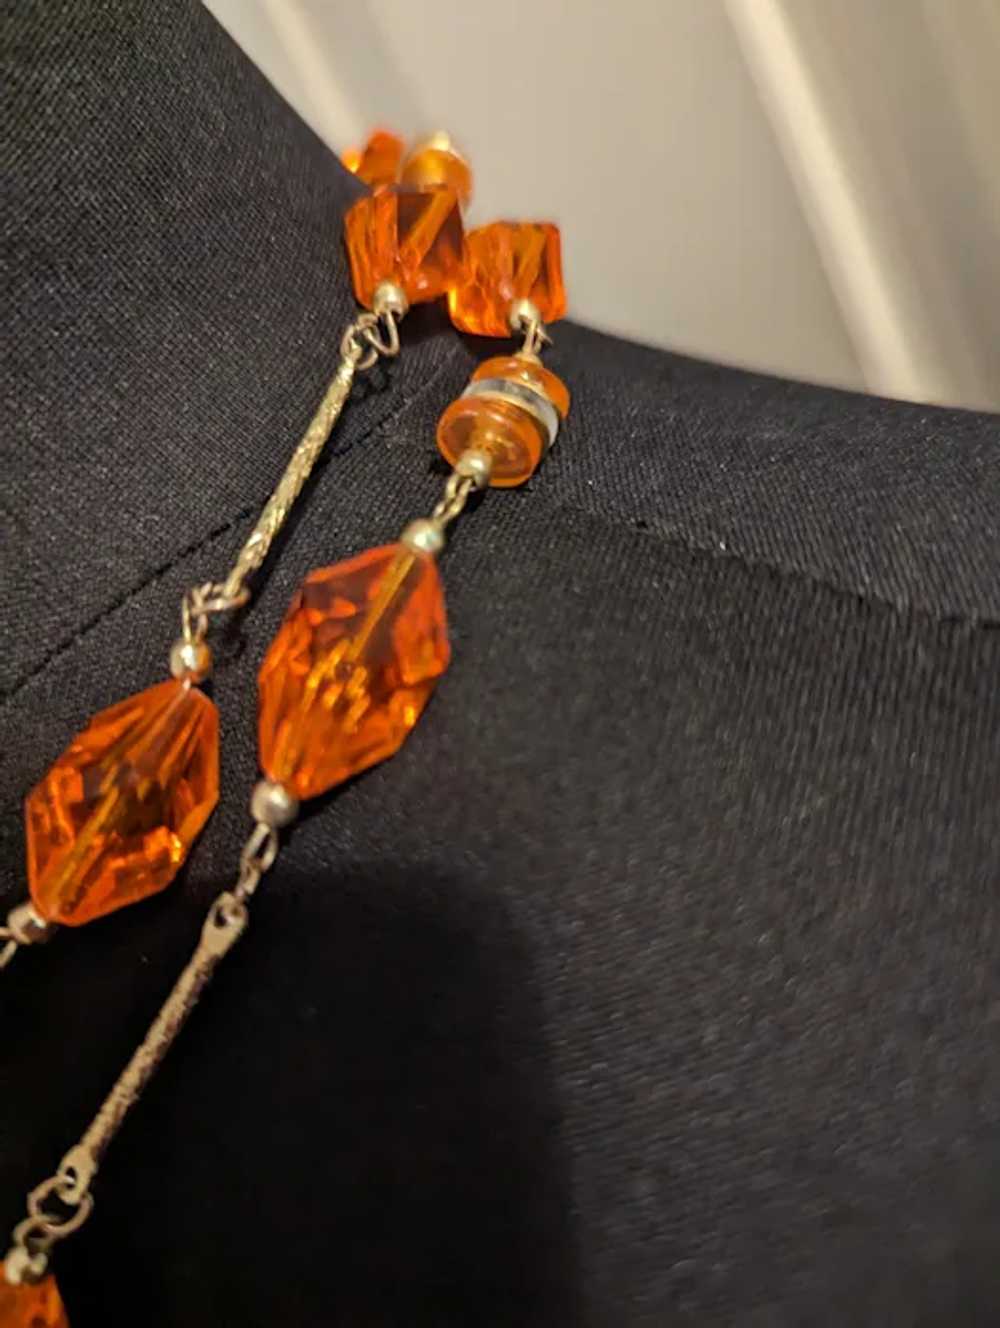 Translucent Orange Lucite Beads Necklace - image 3